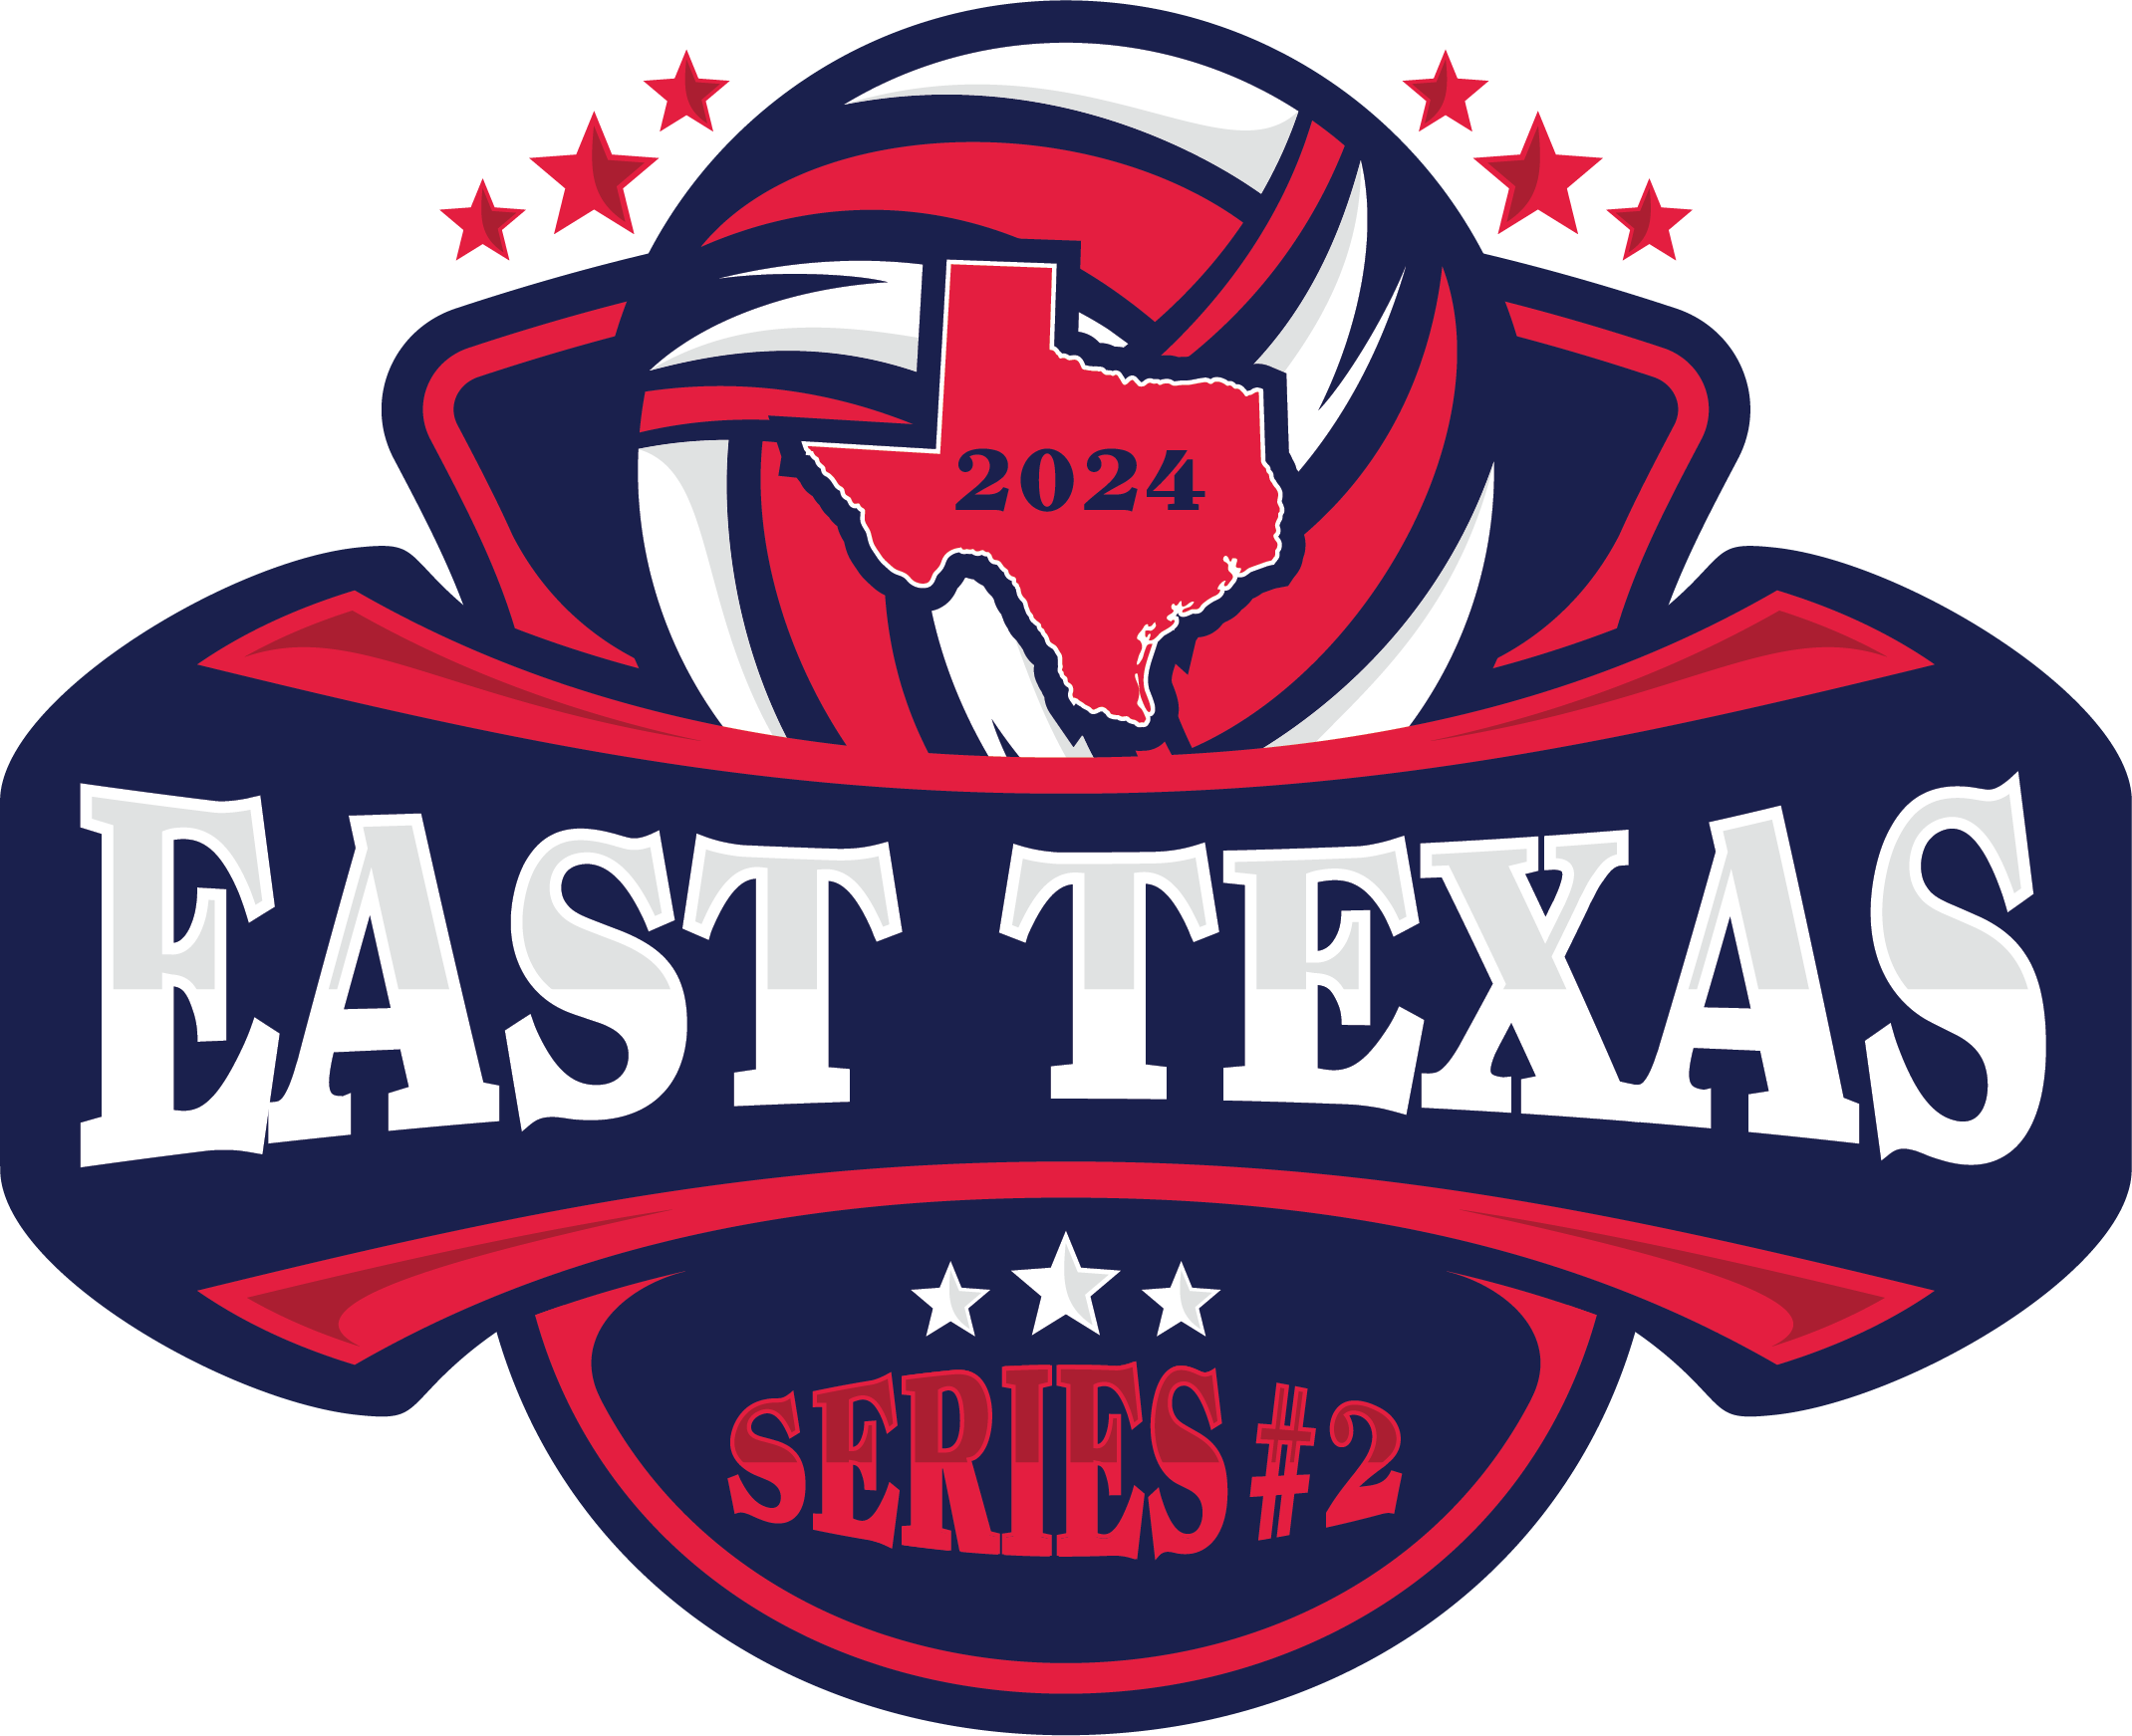 2024 East Texas Series #2